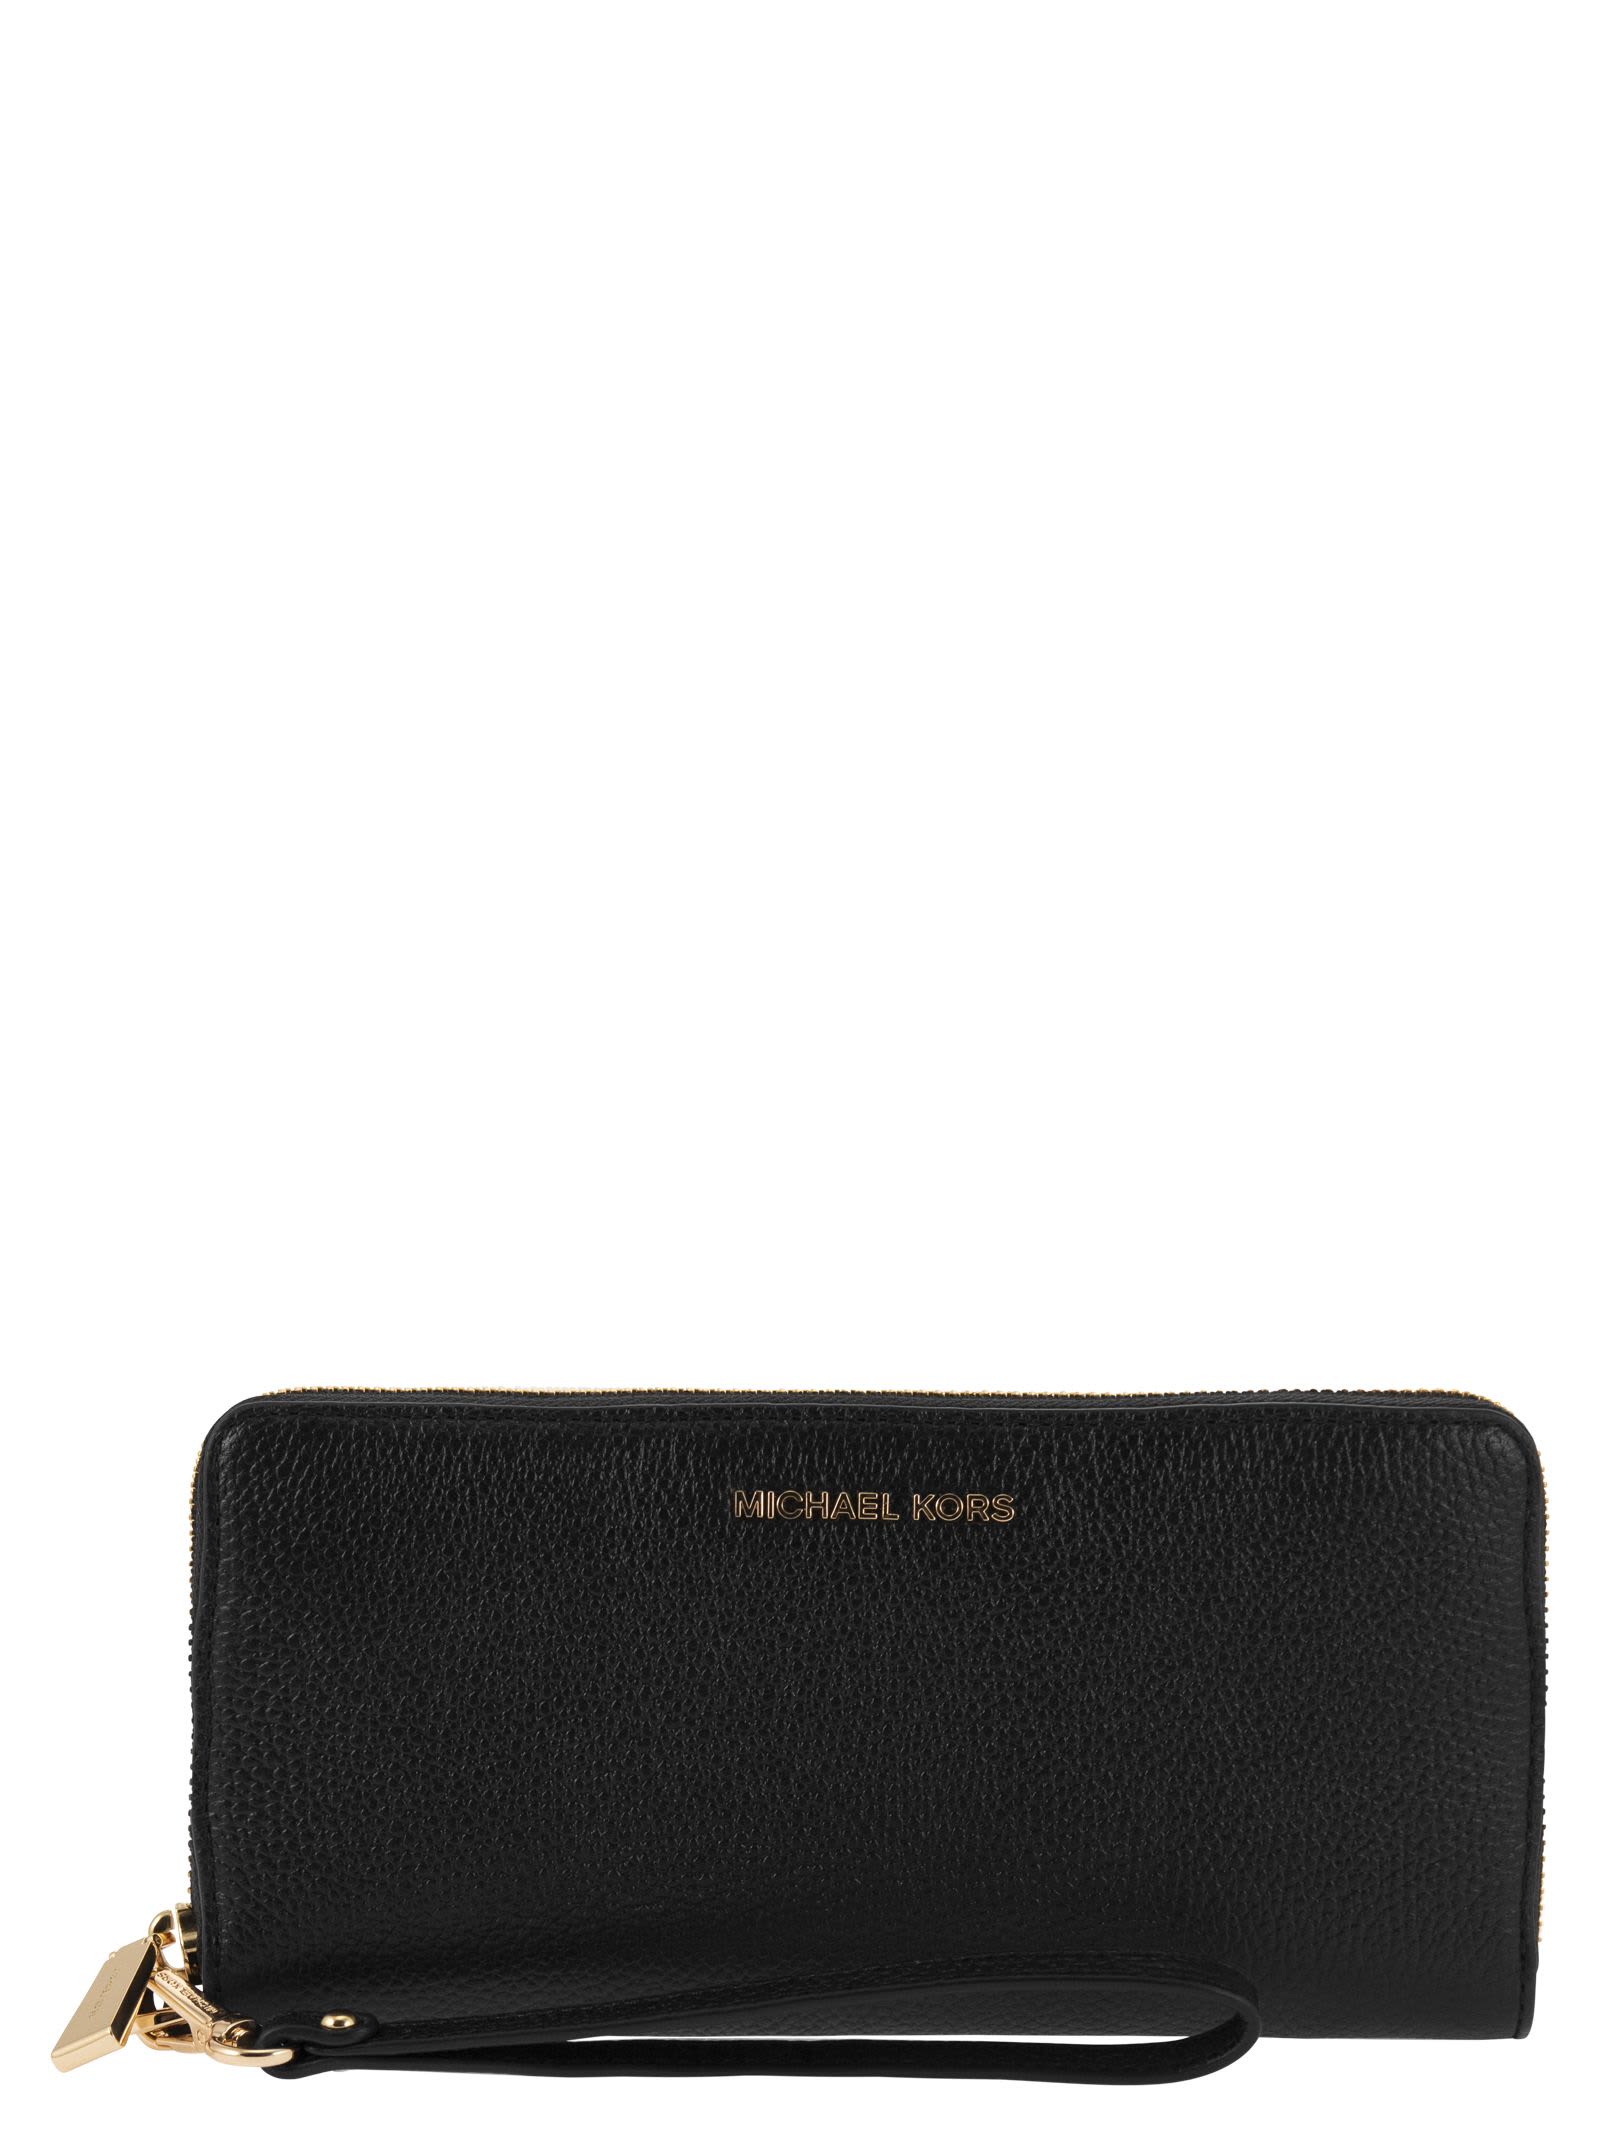 Michael Kors Jet Set - Grained Leather Wallet In Black